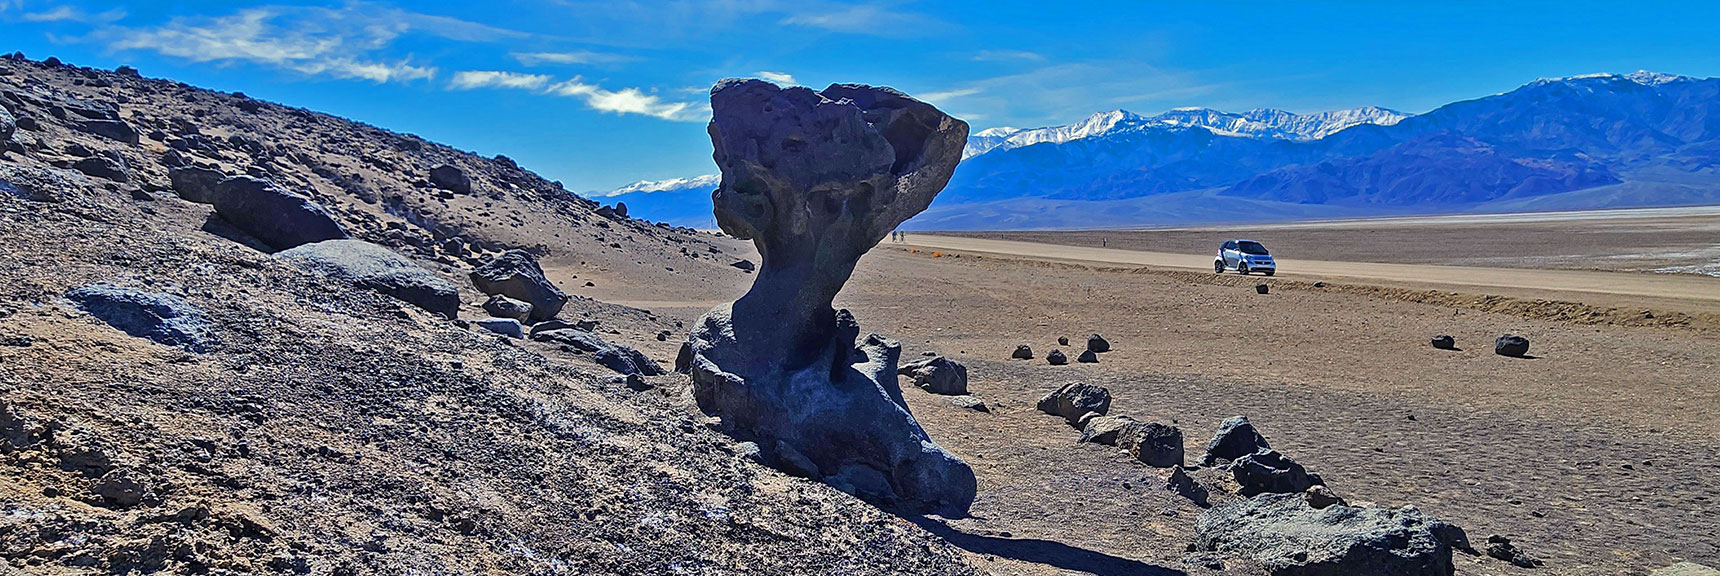 Mushroom Rock | Death Valley National Park, California | David Smith | Las Vegas Area Trails